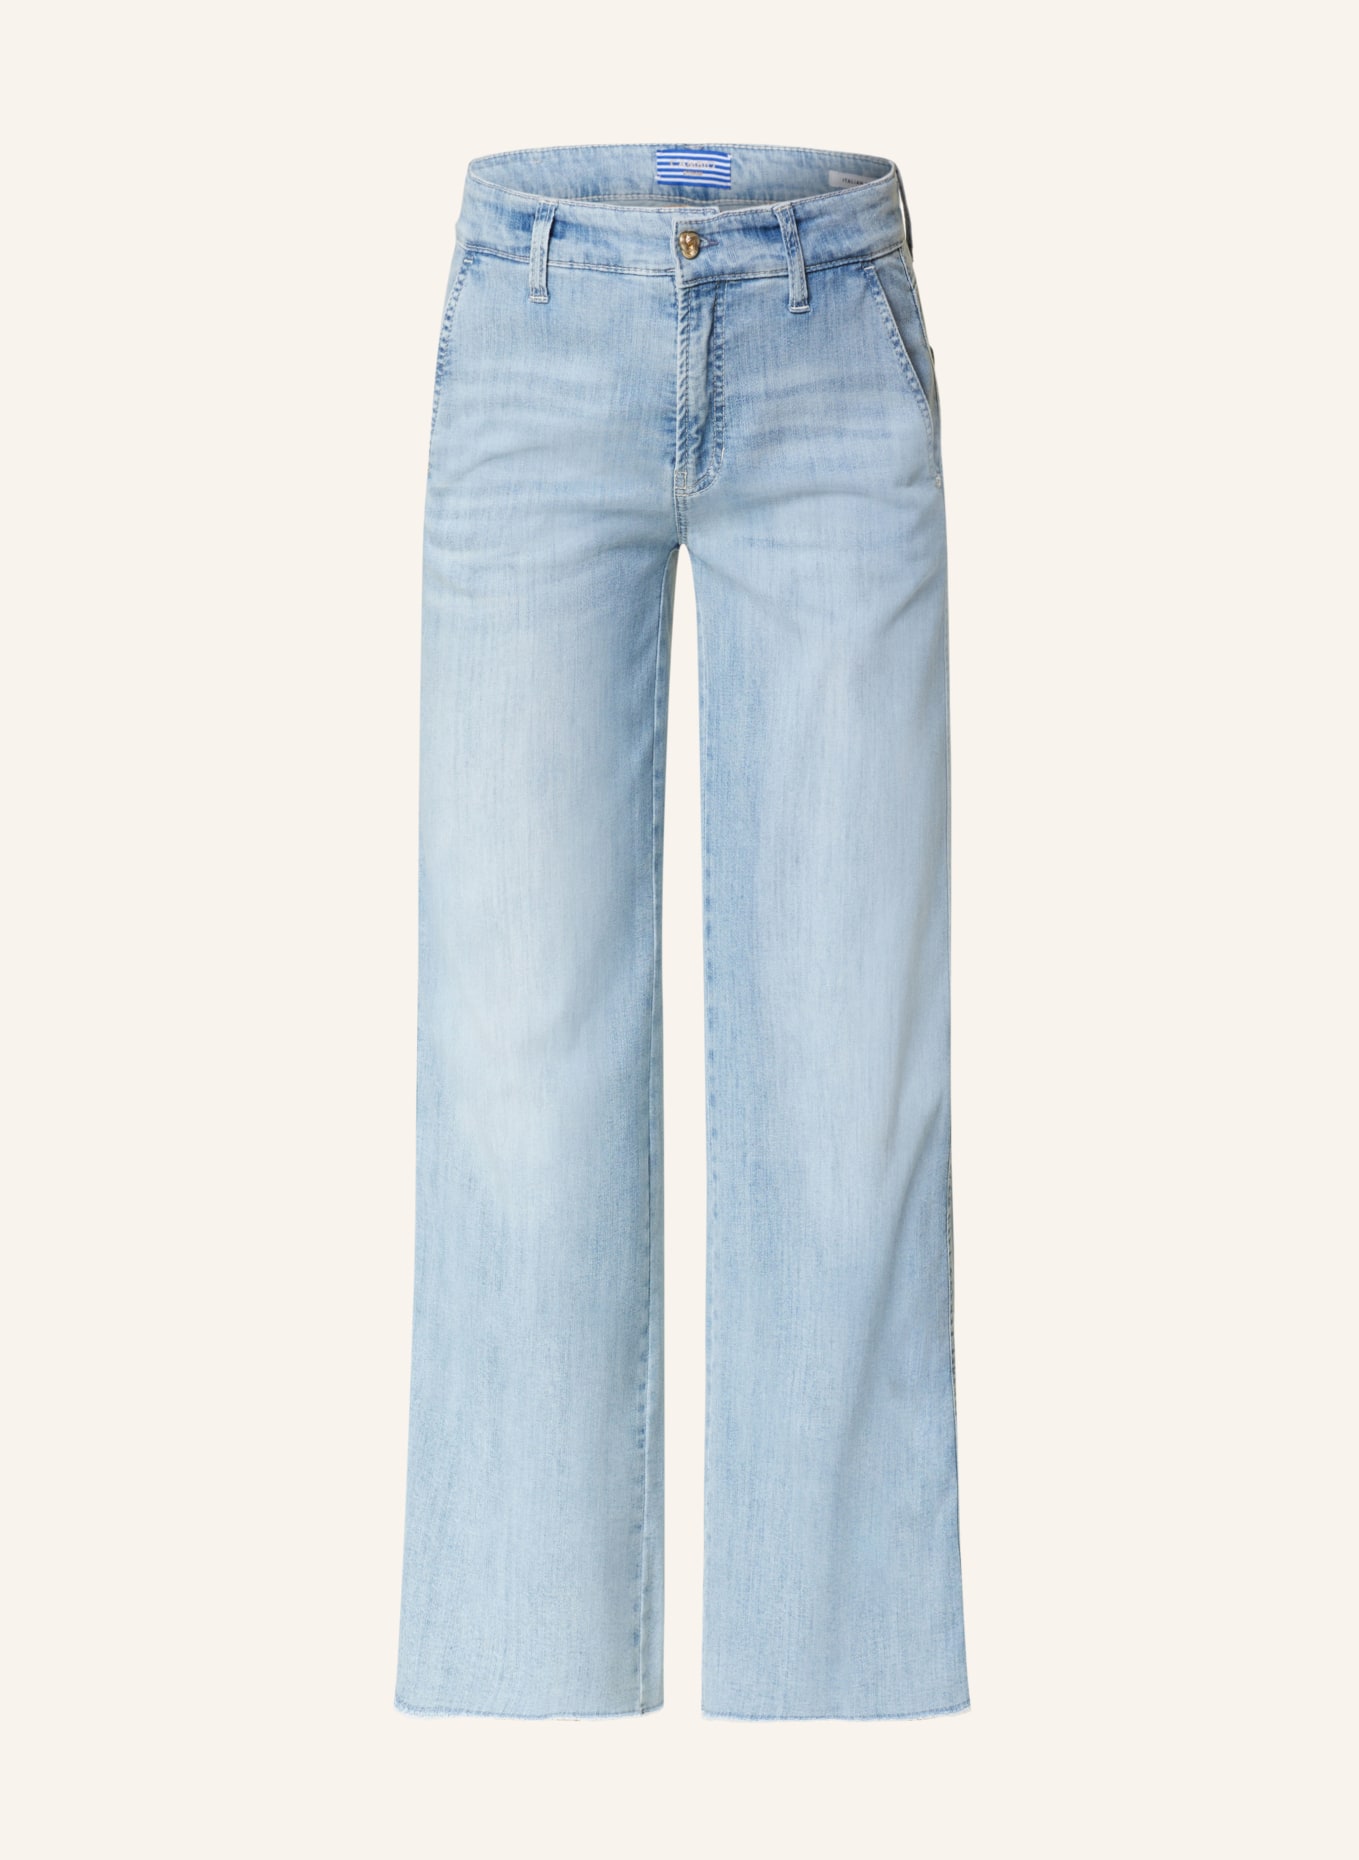 CAMBIO Jeans ALEK, Farbe: 5310 ibiza bleached fringed (Bild 1)